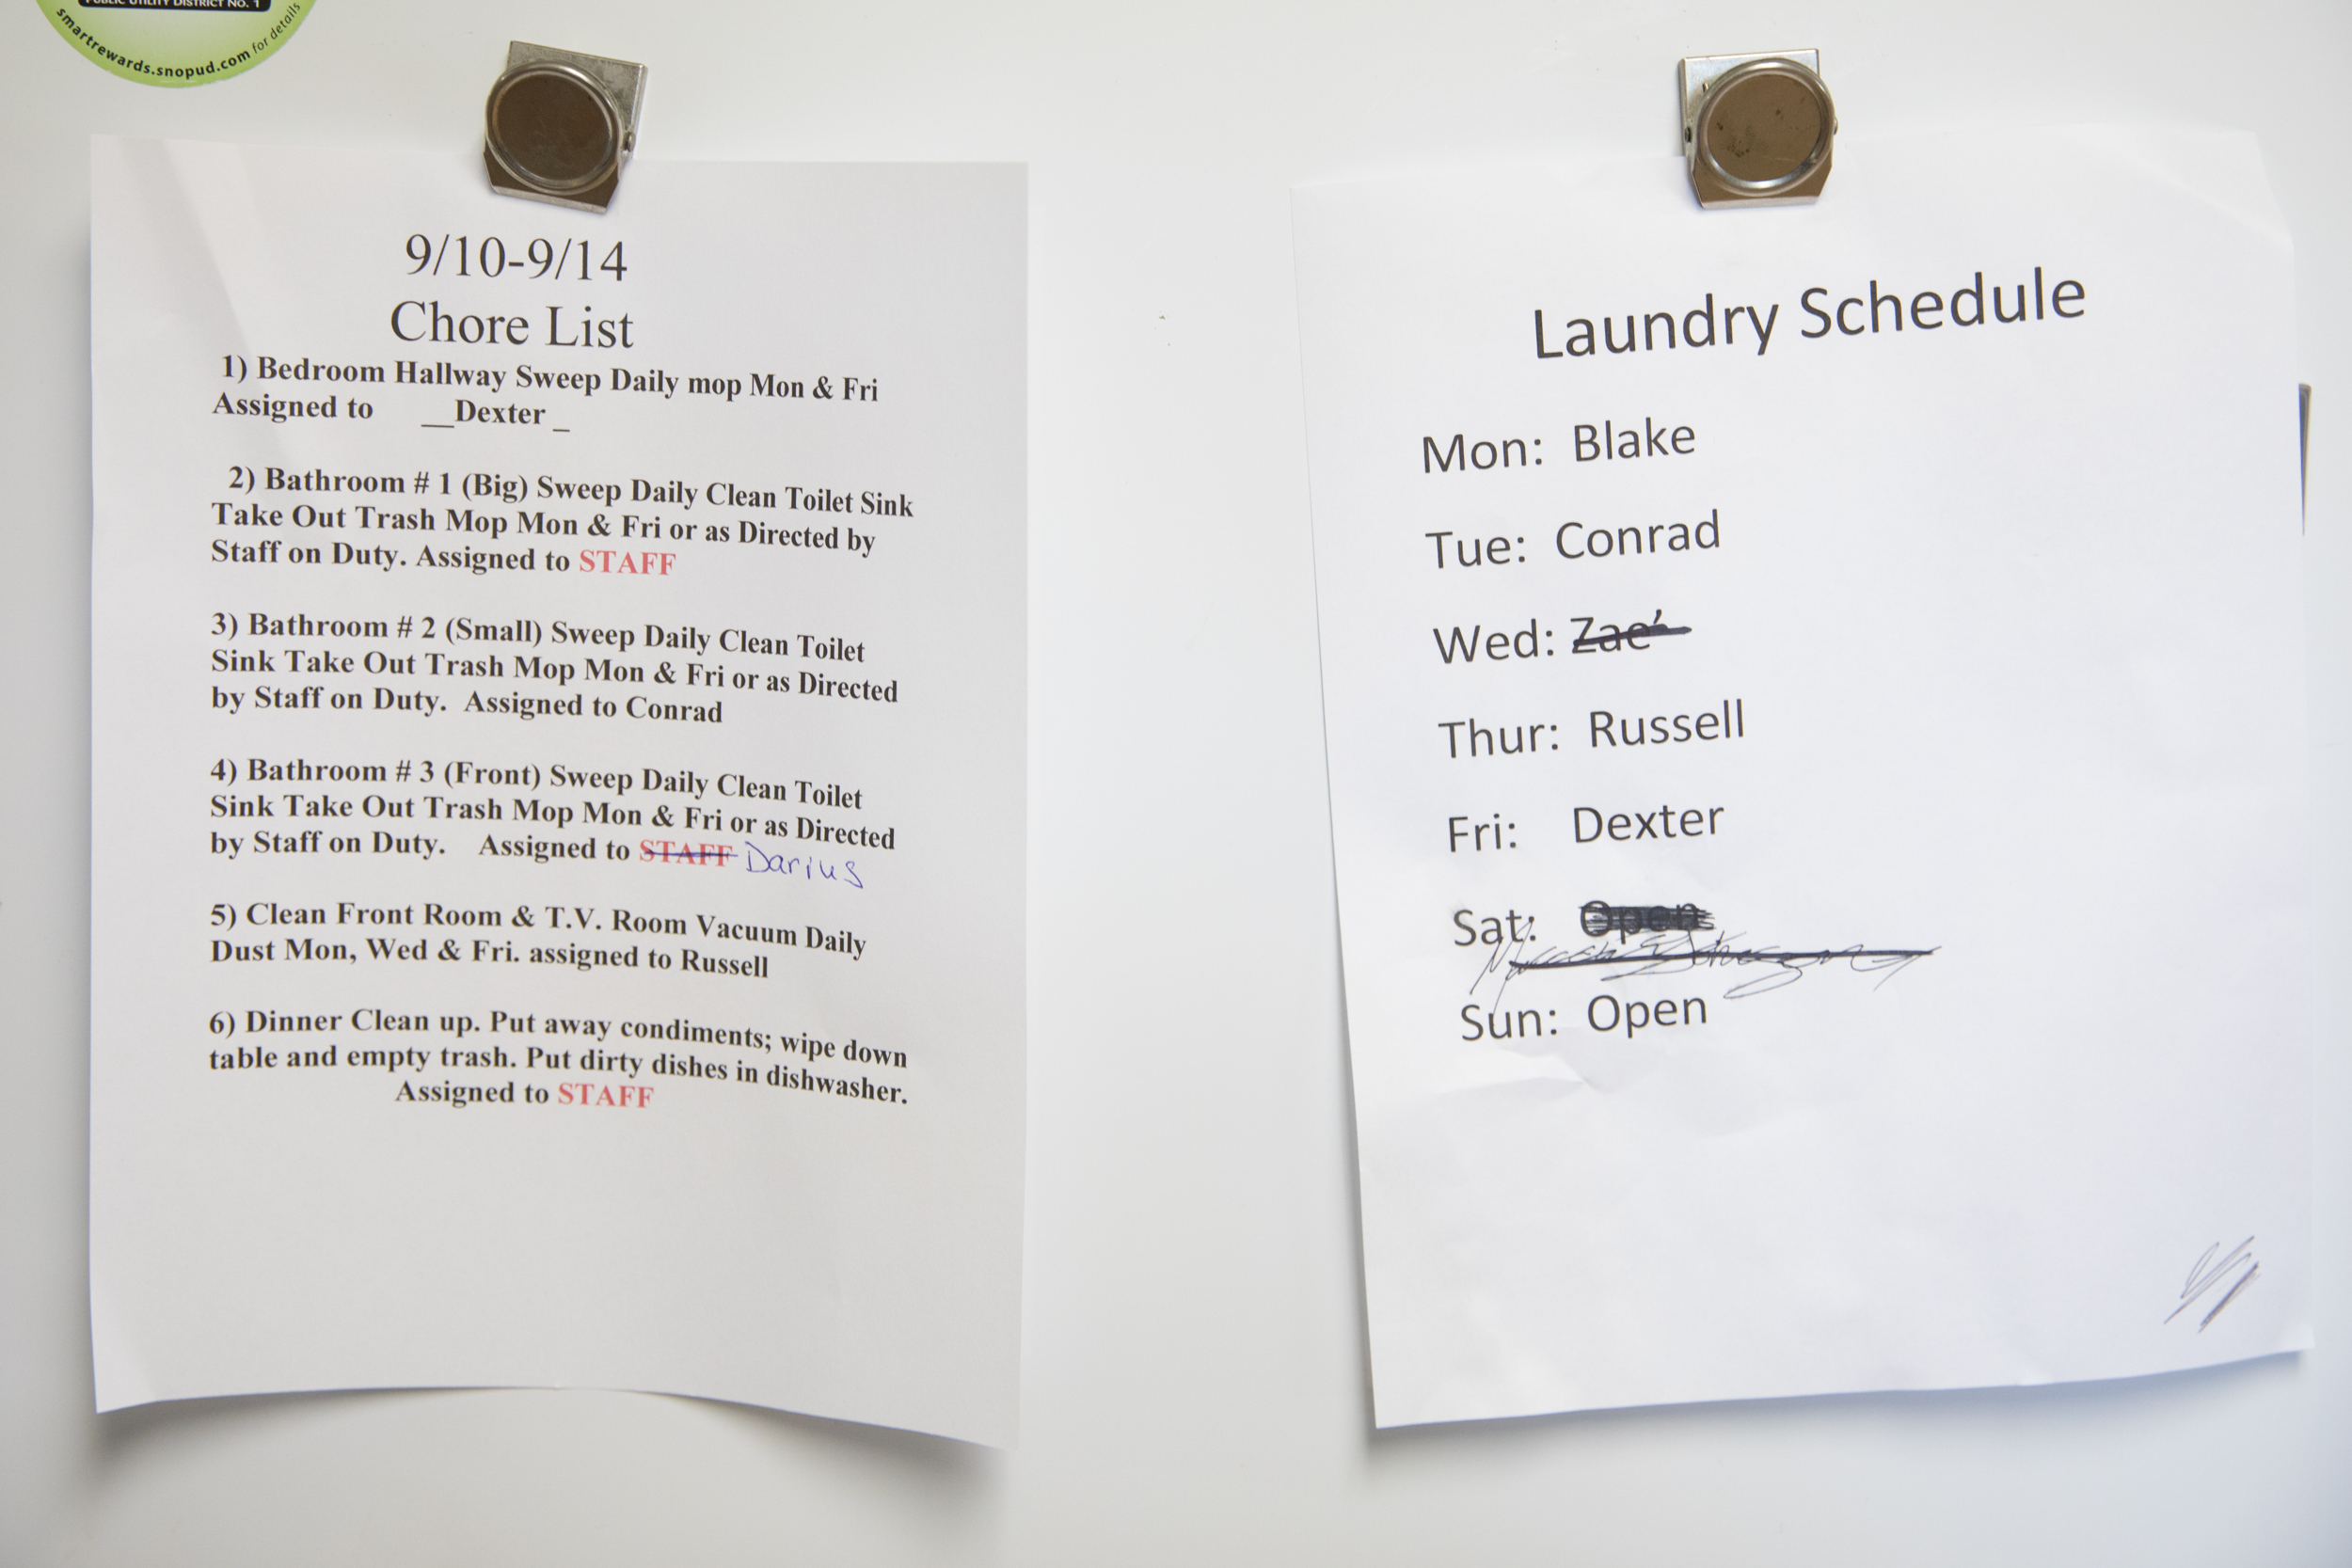 A chore list and laundry schedule for Secret Harbor foster home residents in Burlington, WA. (Matt M. McKnight/Crosscut) 